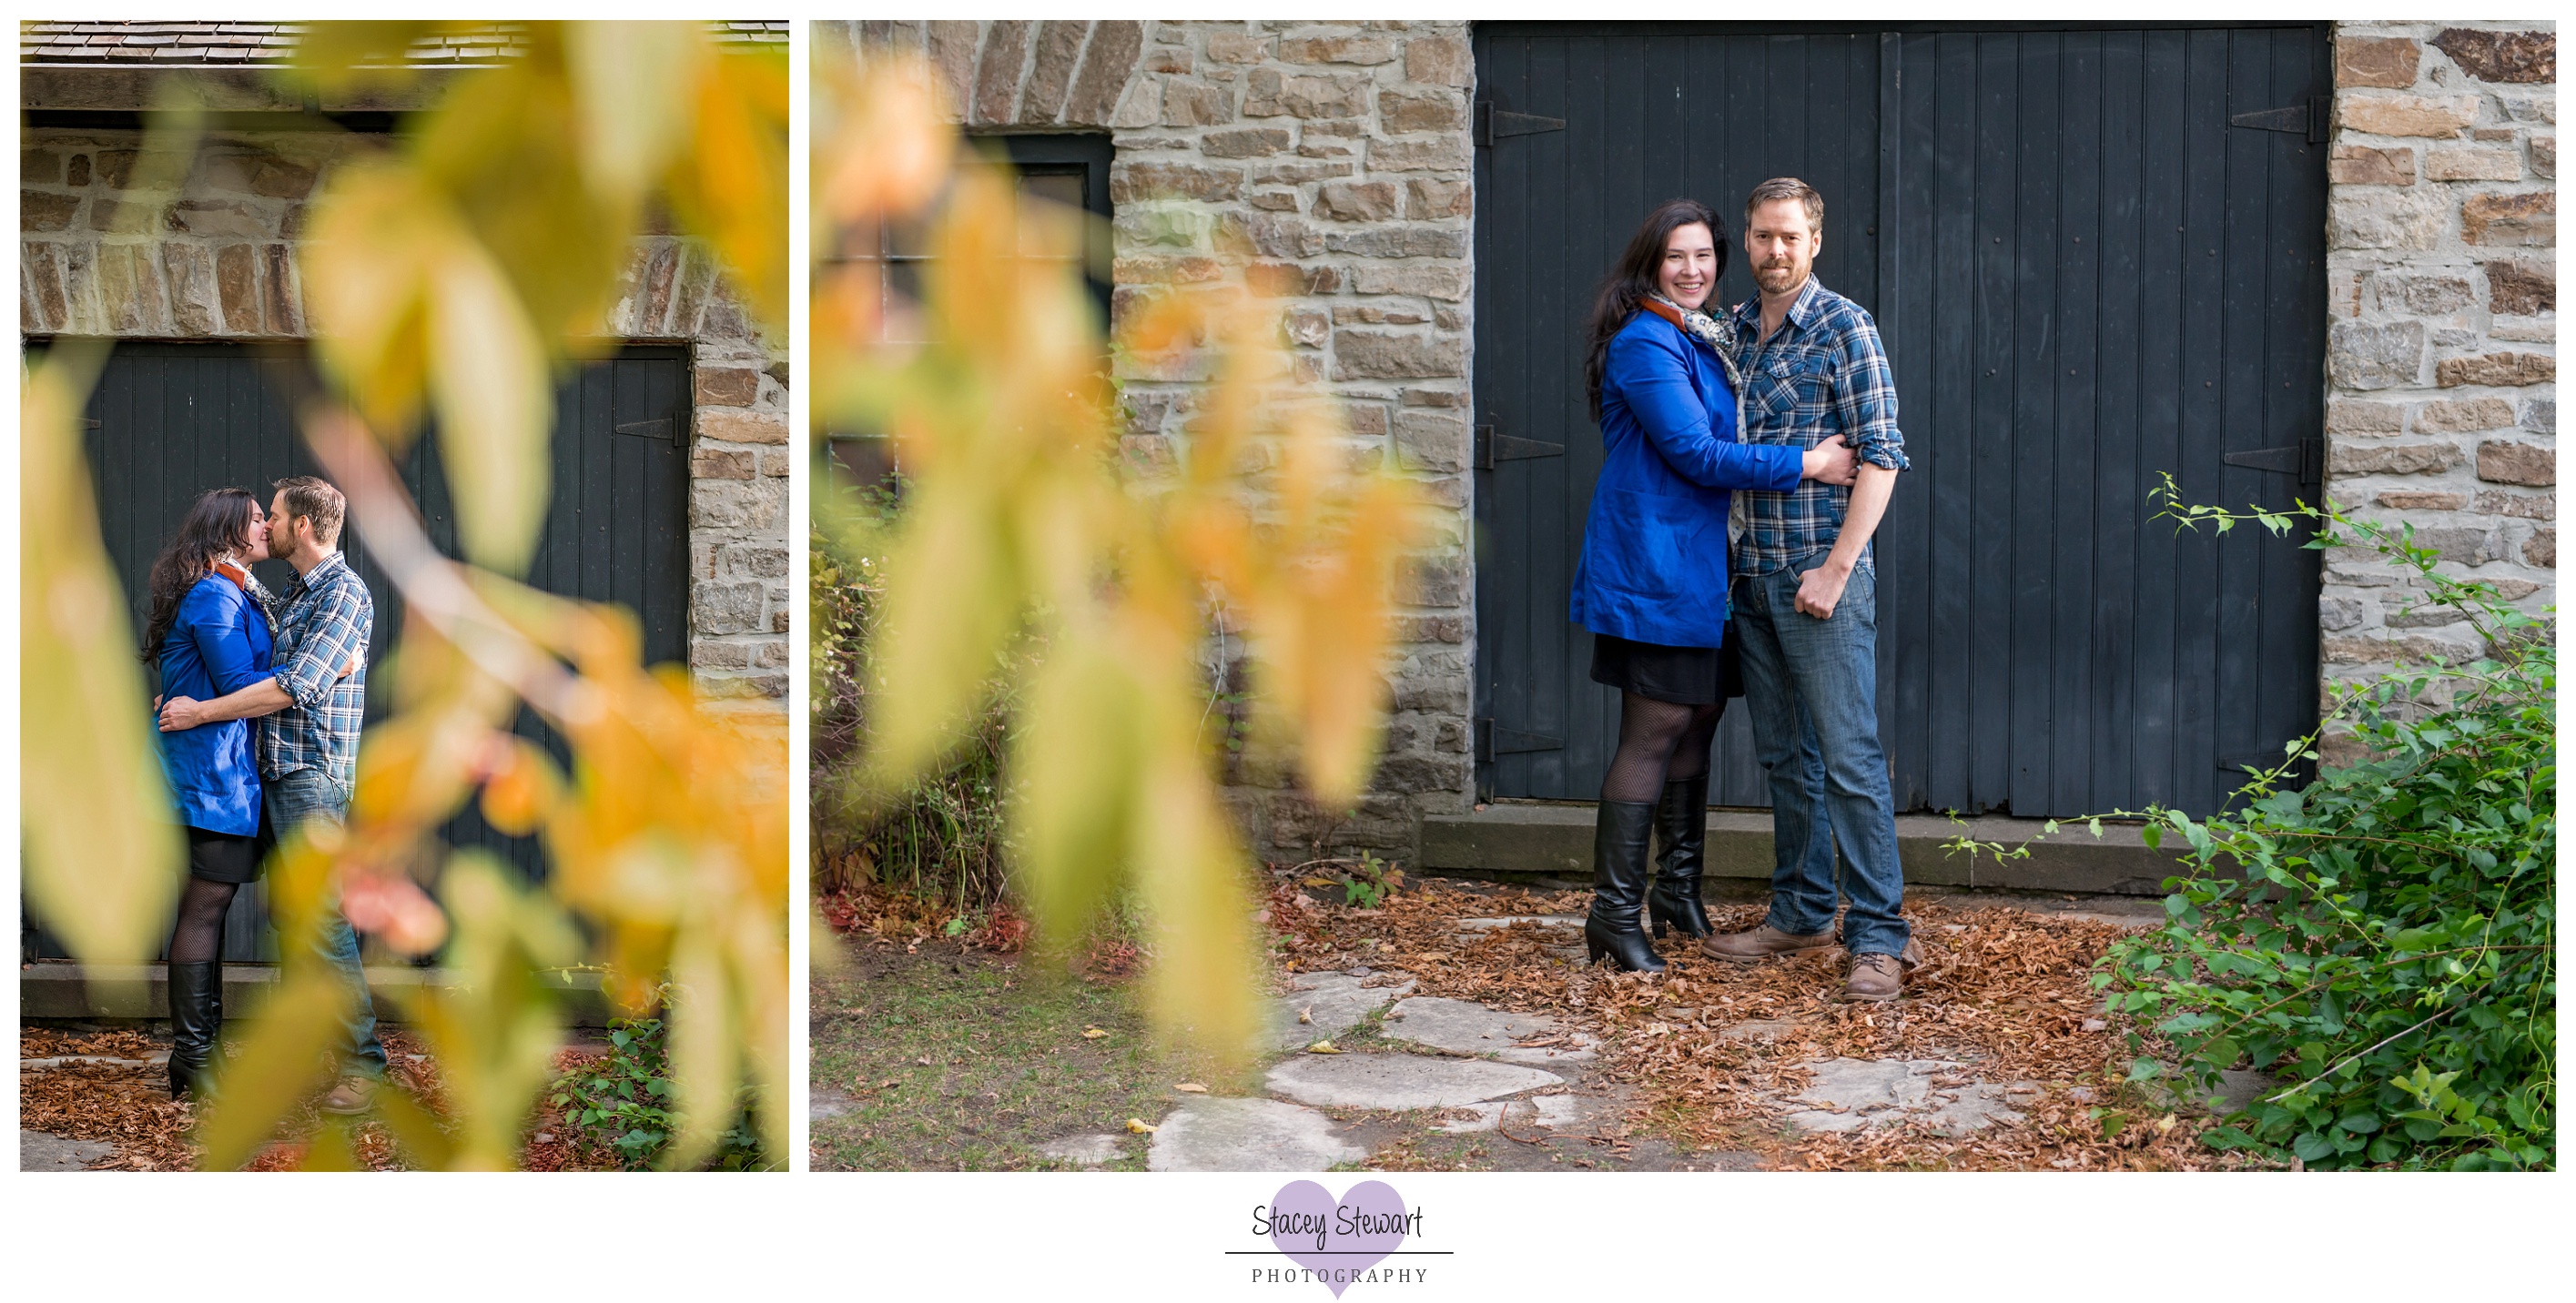 Ottawa wedding photographer, New years resolution, Stacey Stewart Photography